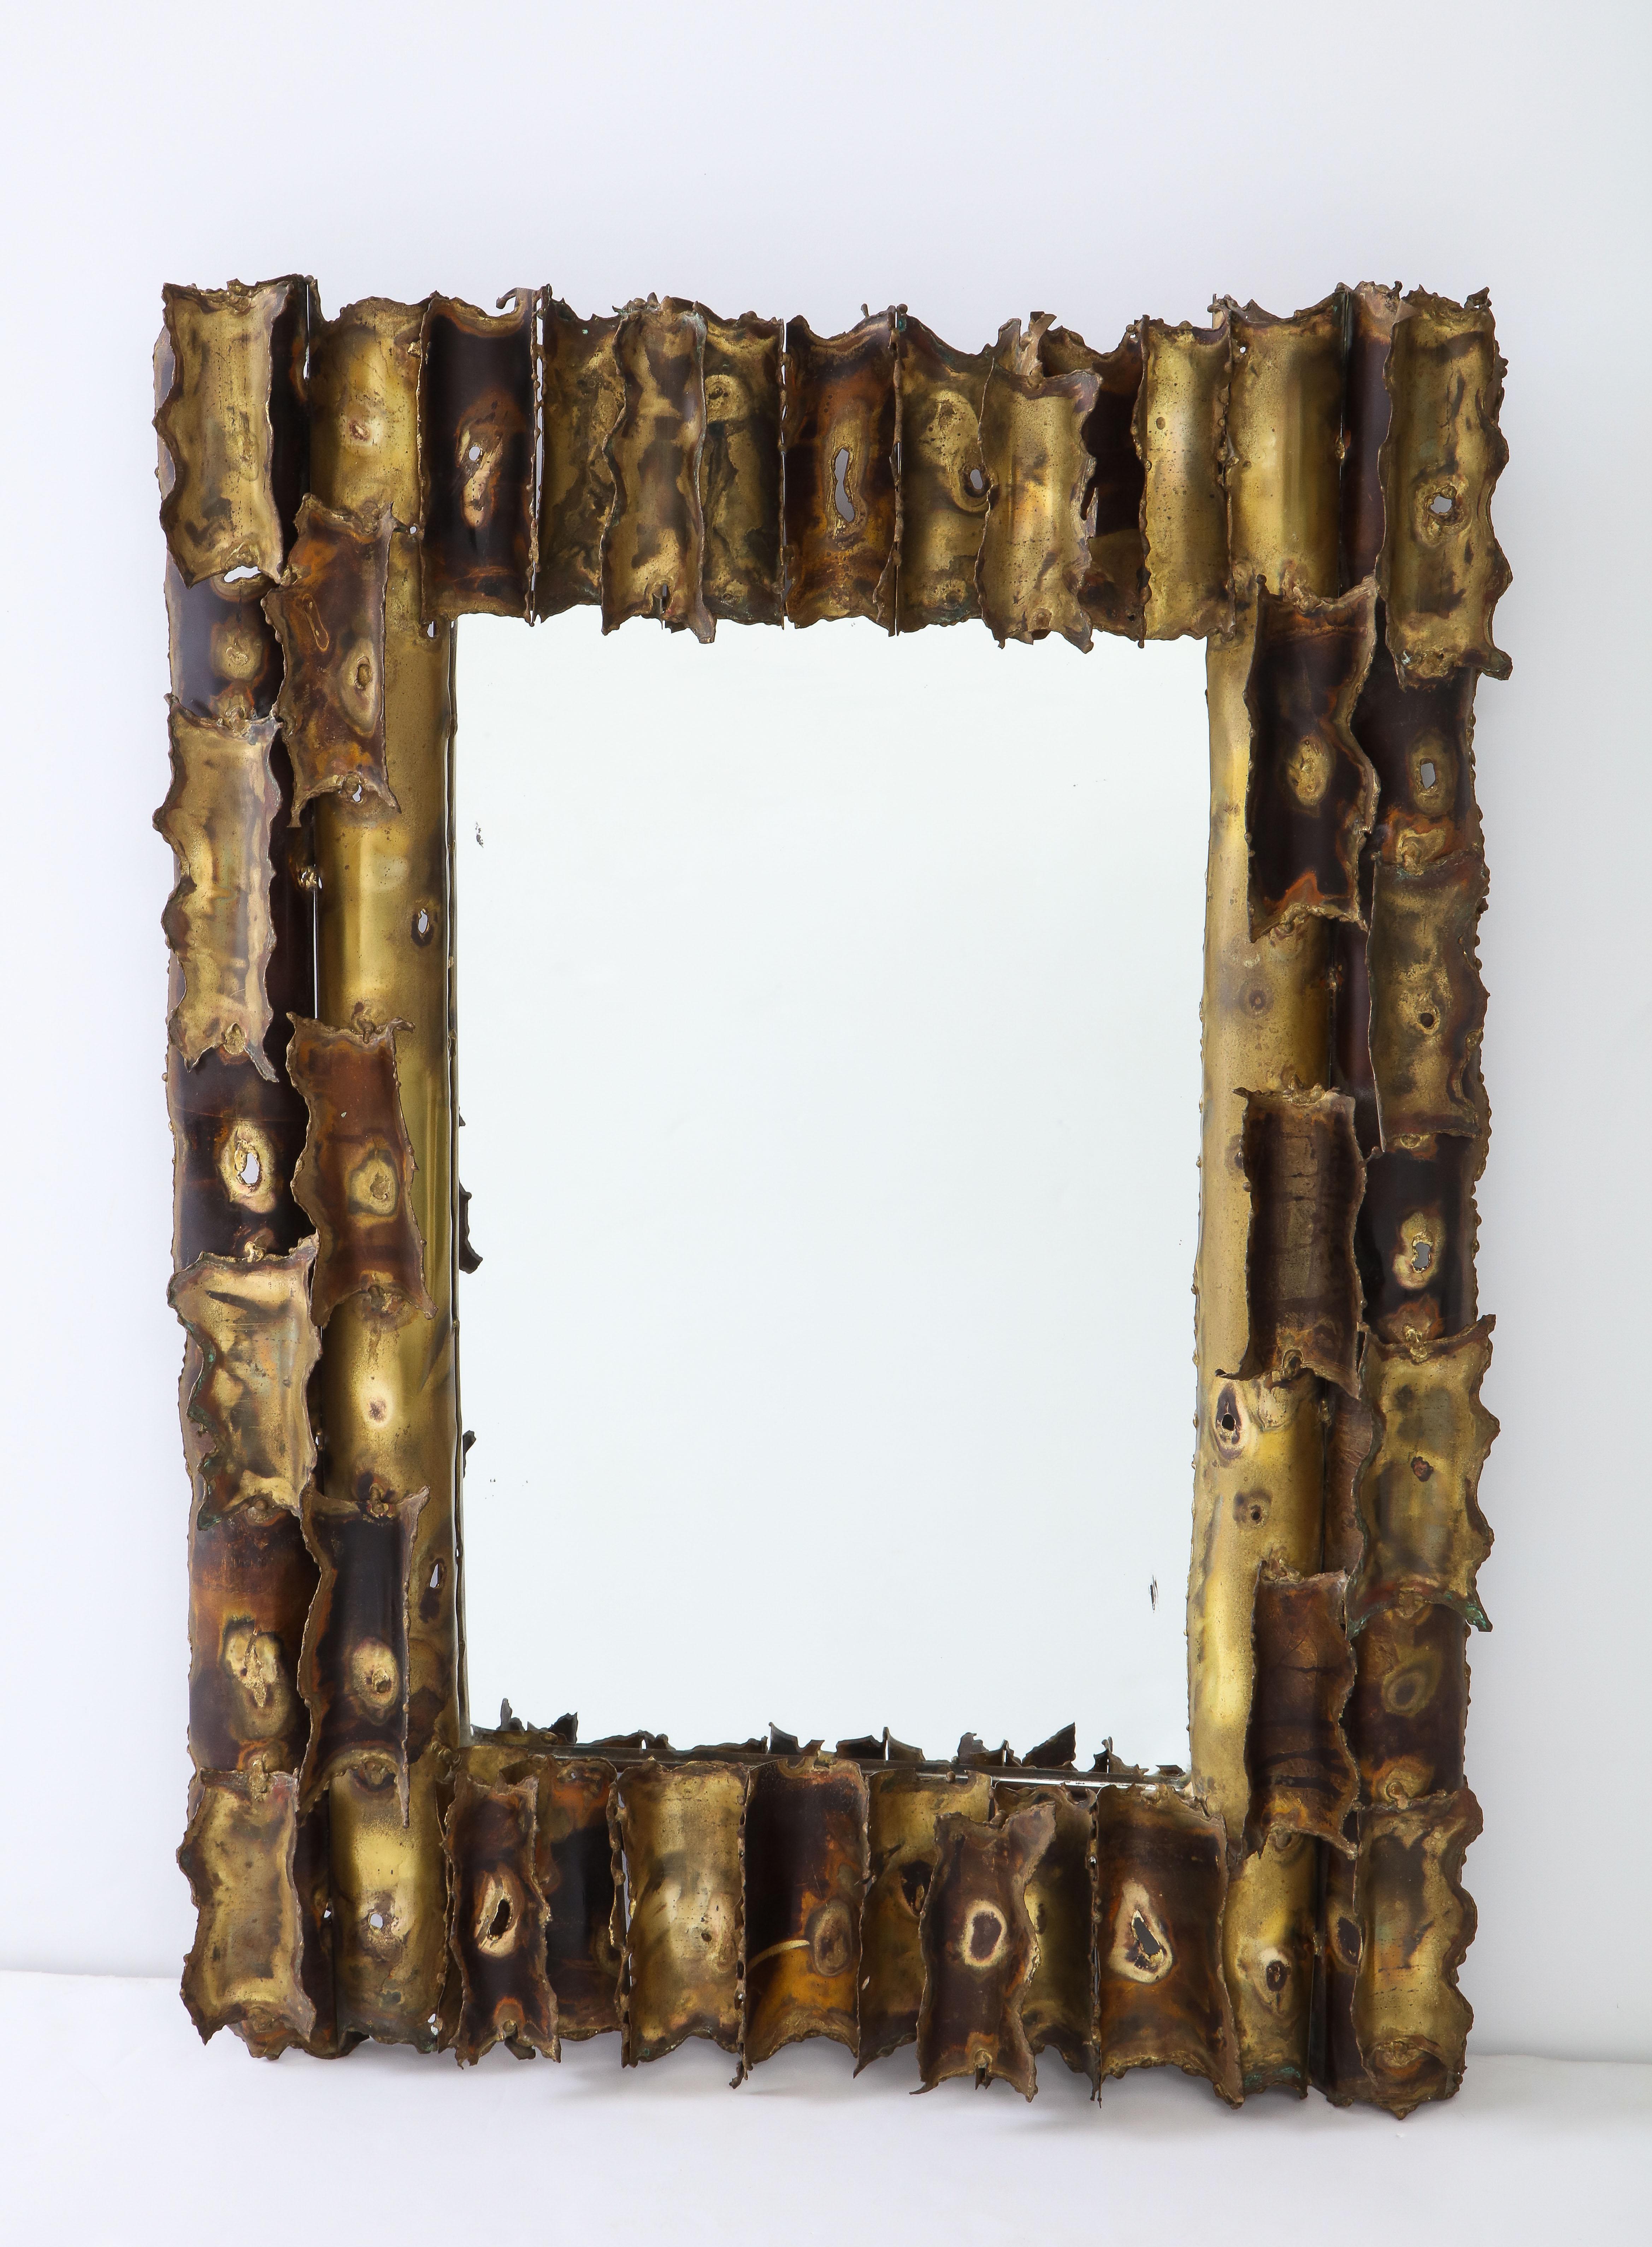 Stunning one of a kind custom made Brutalist mirror by Tom Greene.